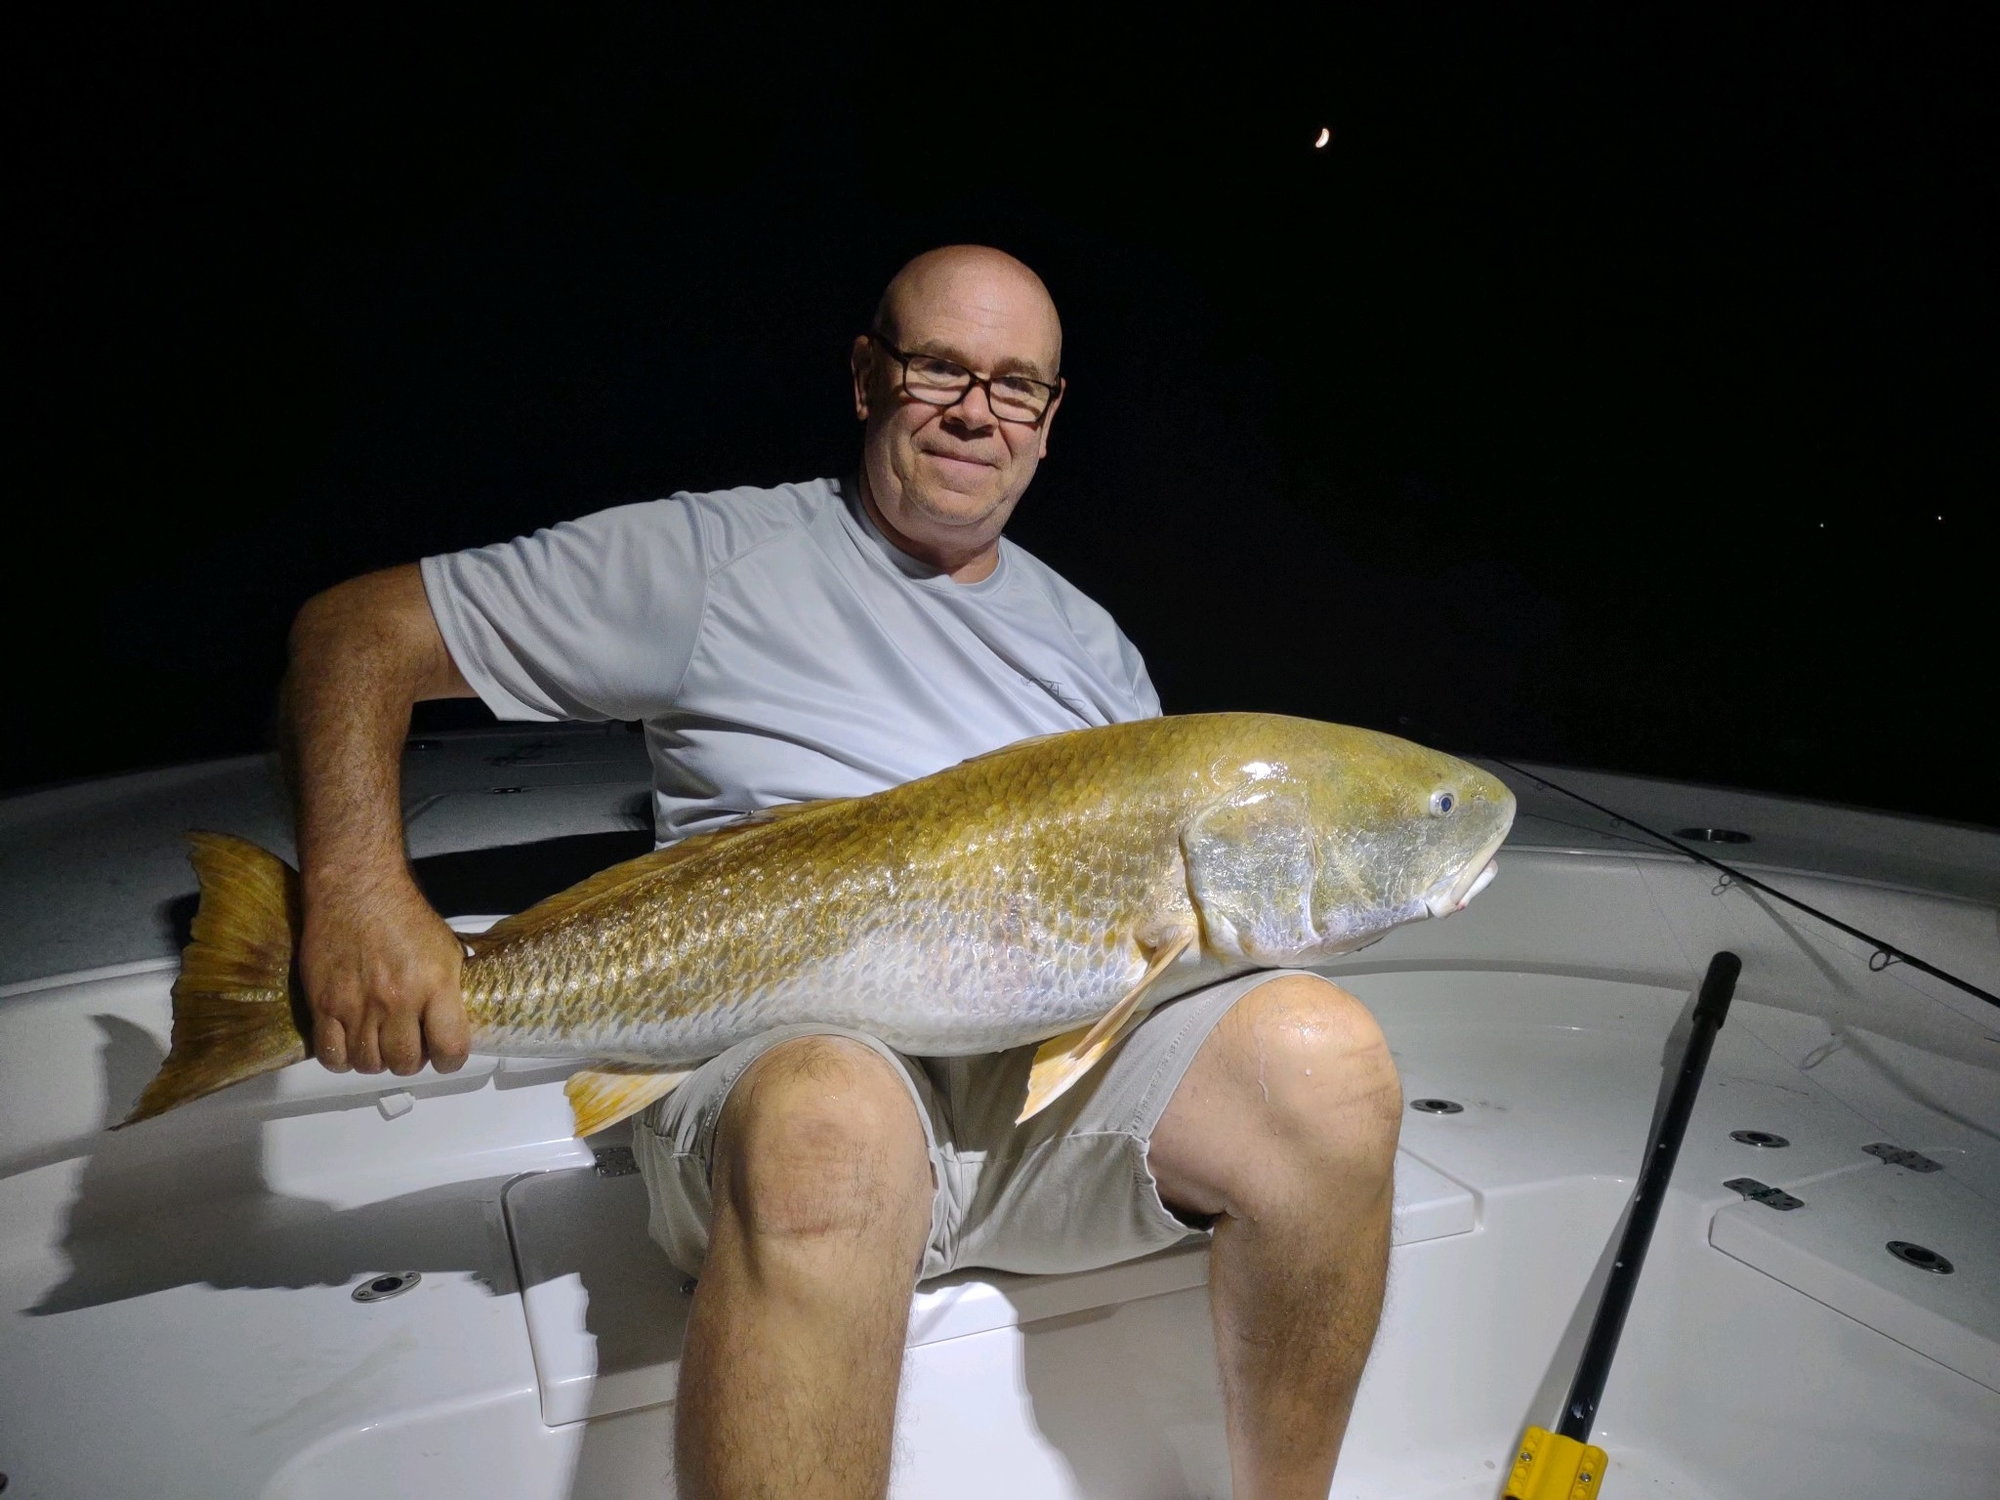 Outer Banks surf fishing report - trout, drum, mullet - Carolina Sportsman